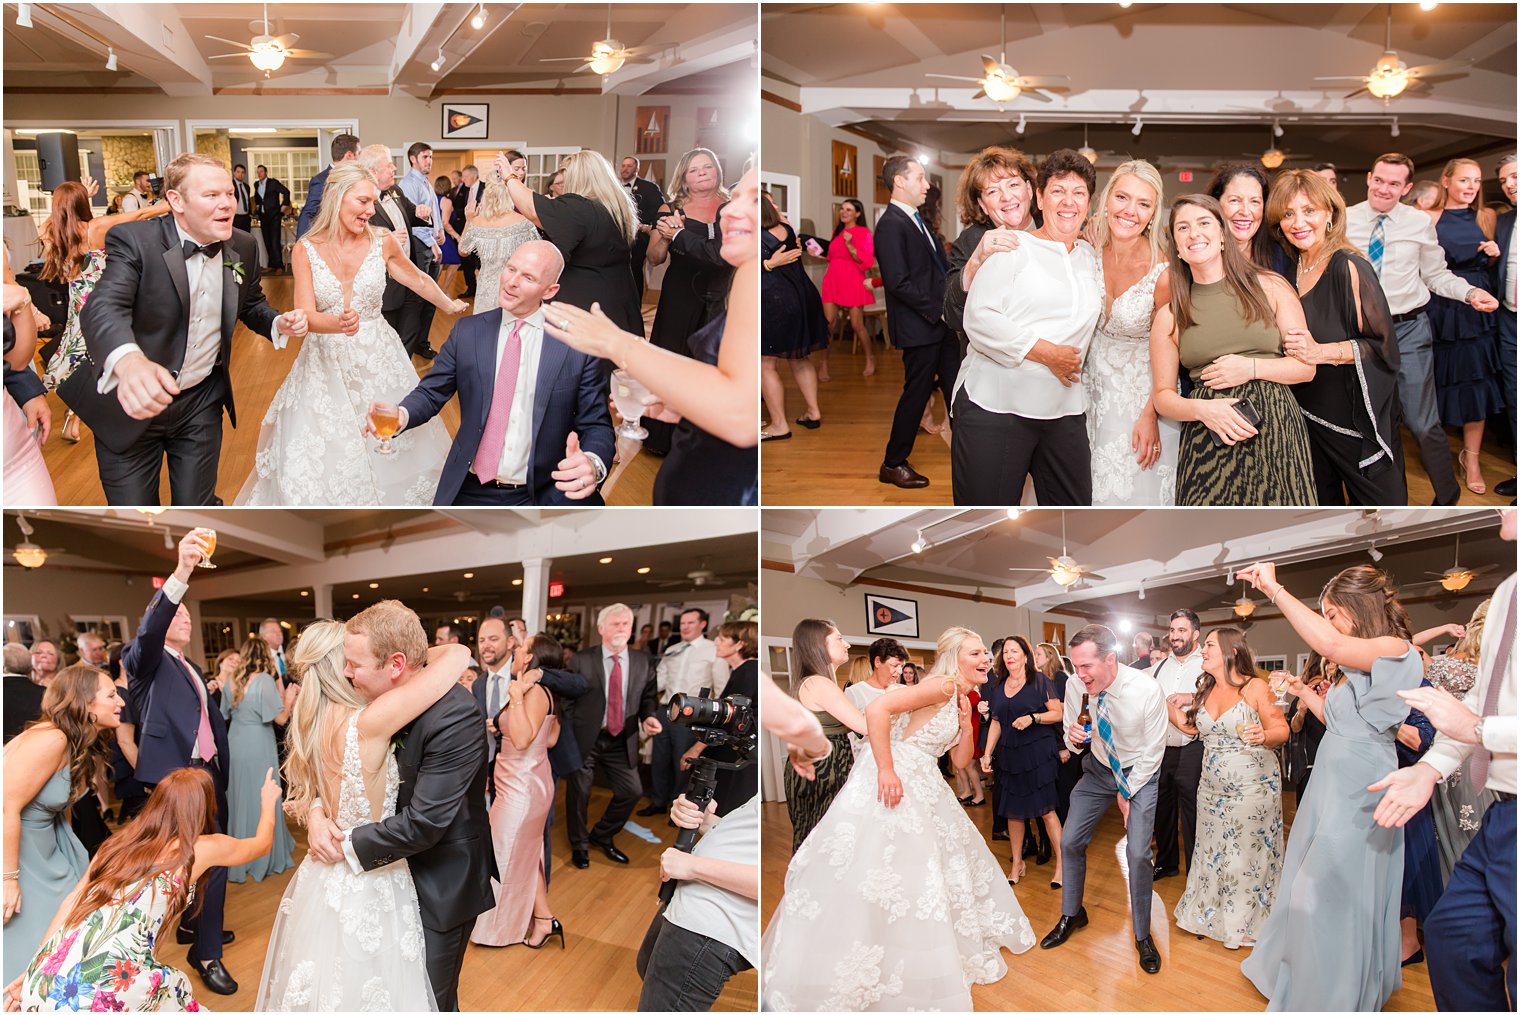 Long Beach NJ wedding reception dancing with bride and groom 